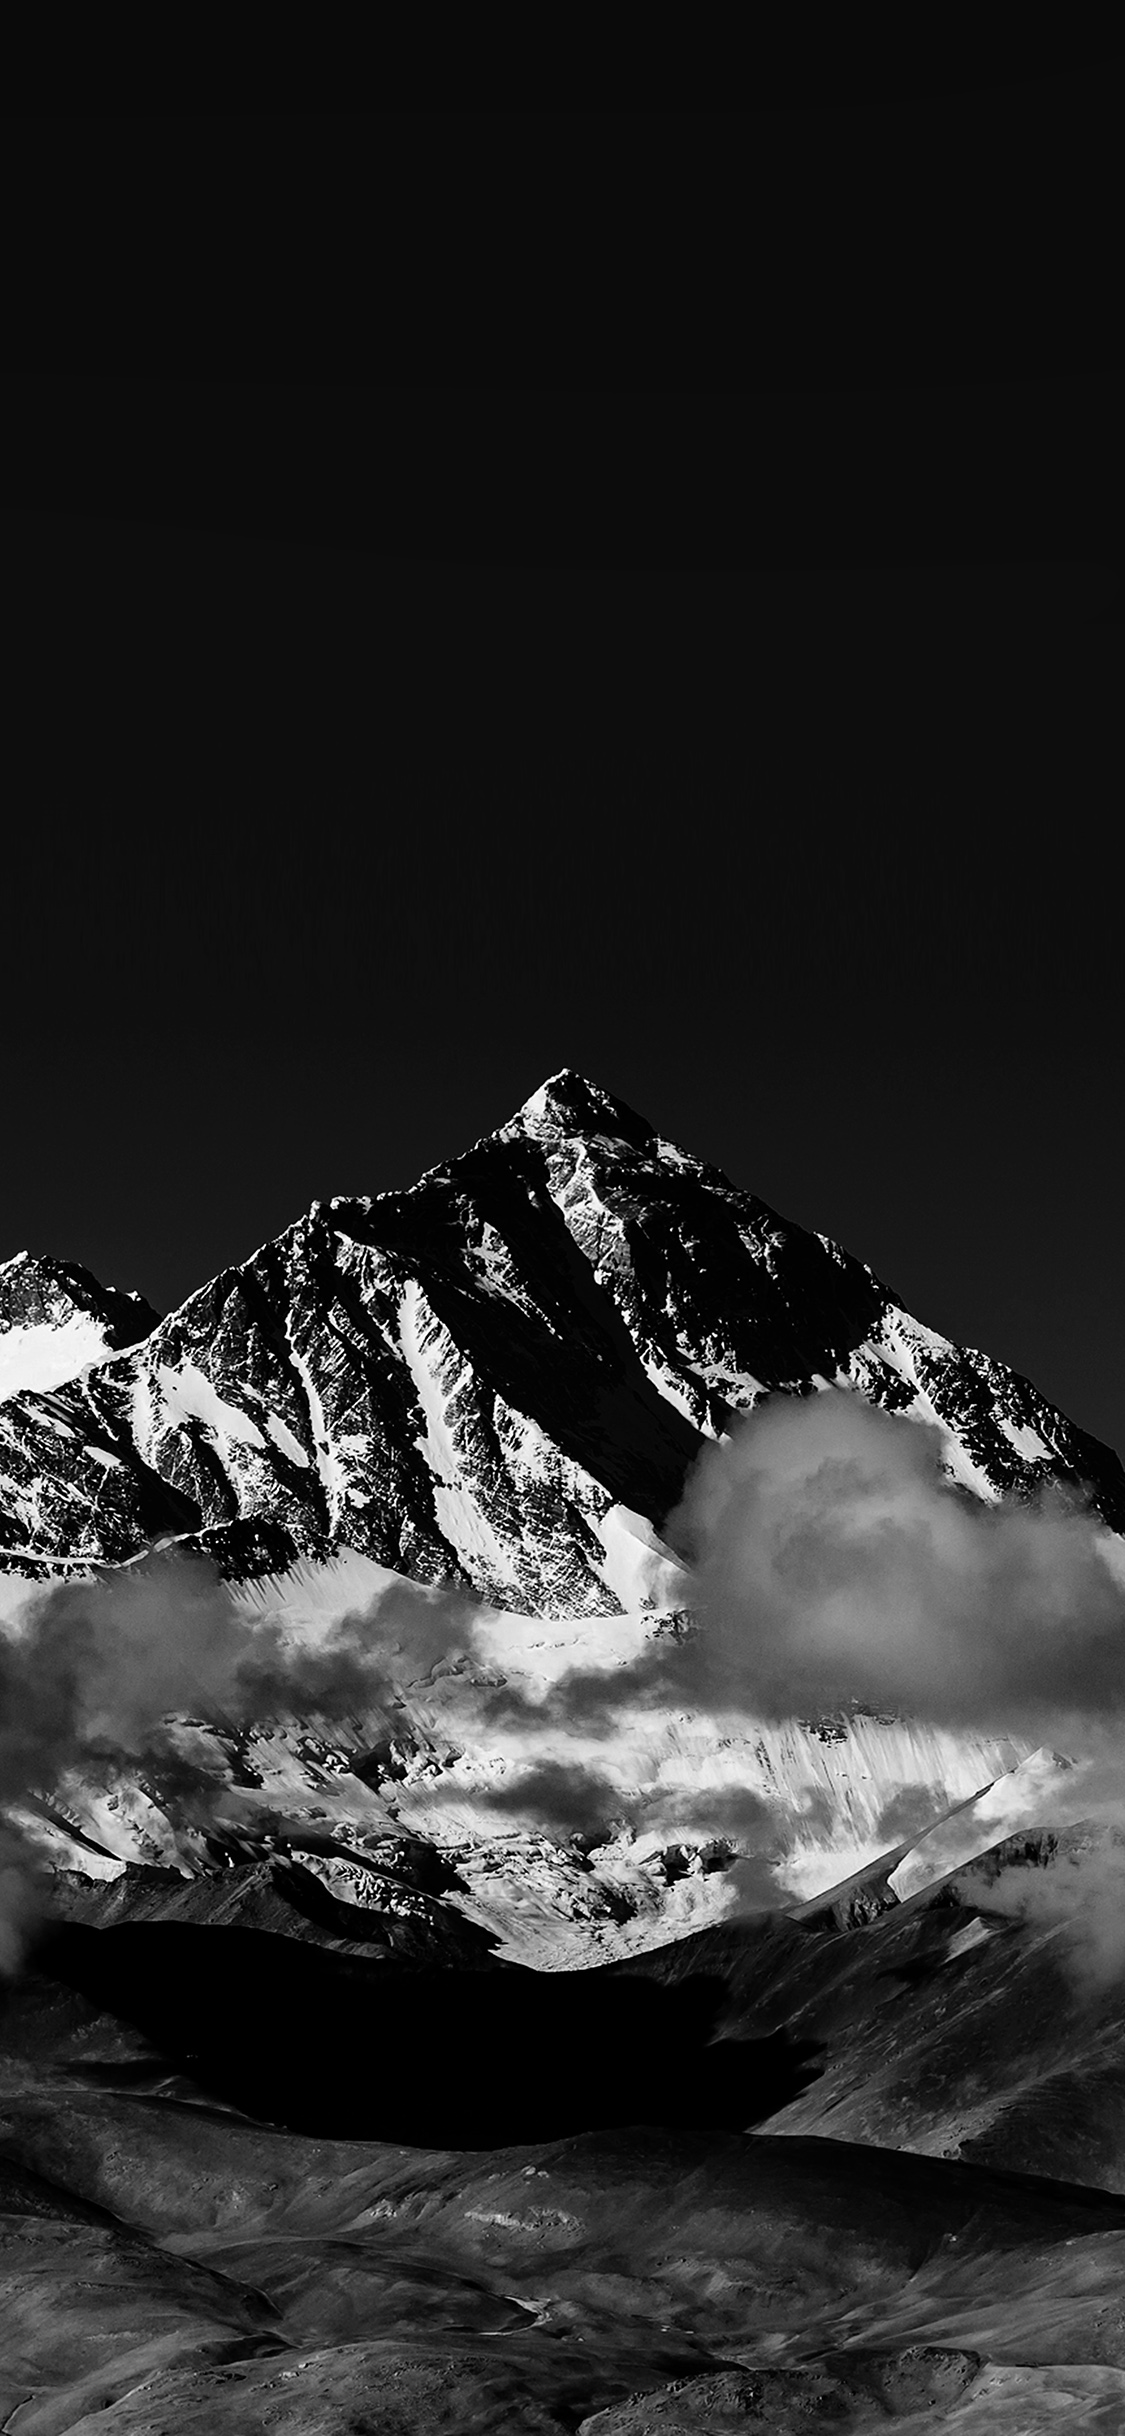 iPhone X wallpaper. snow solo mountain high nature dark bw